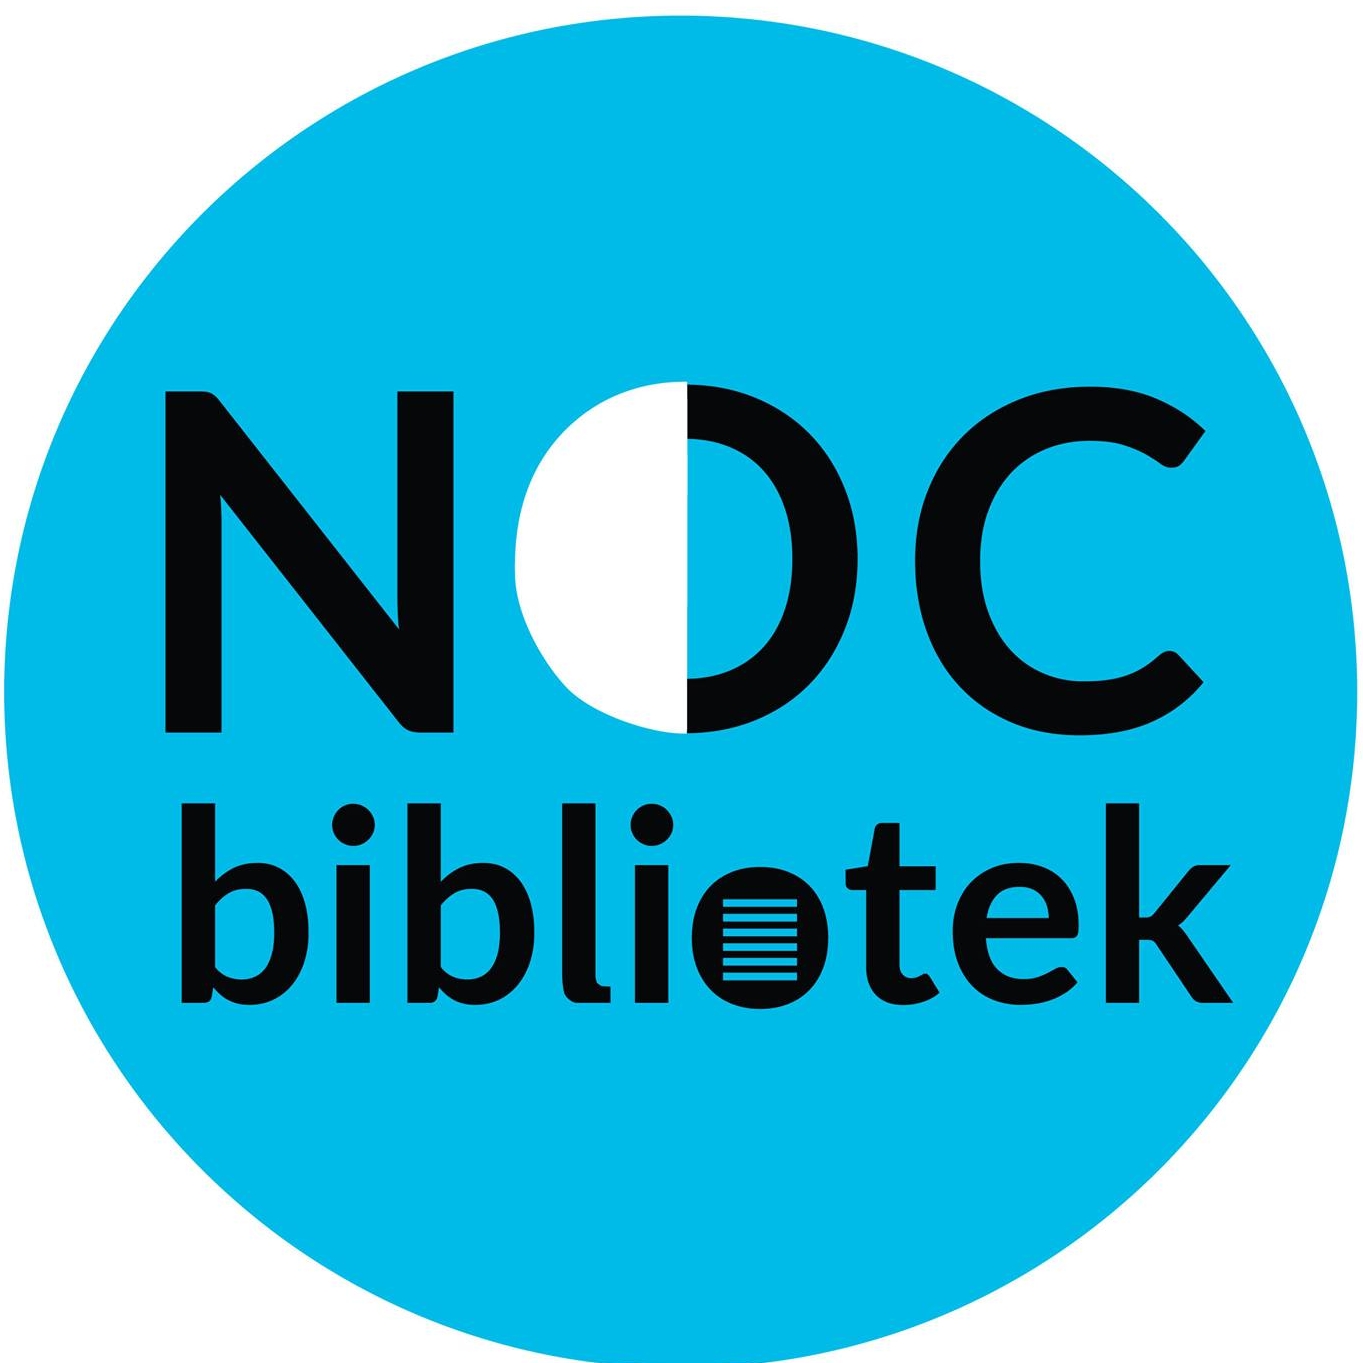 Logo Noc Bibliotek